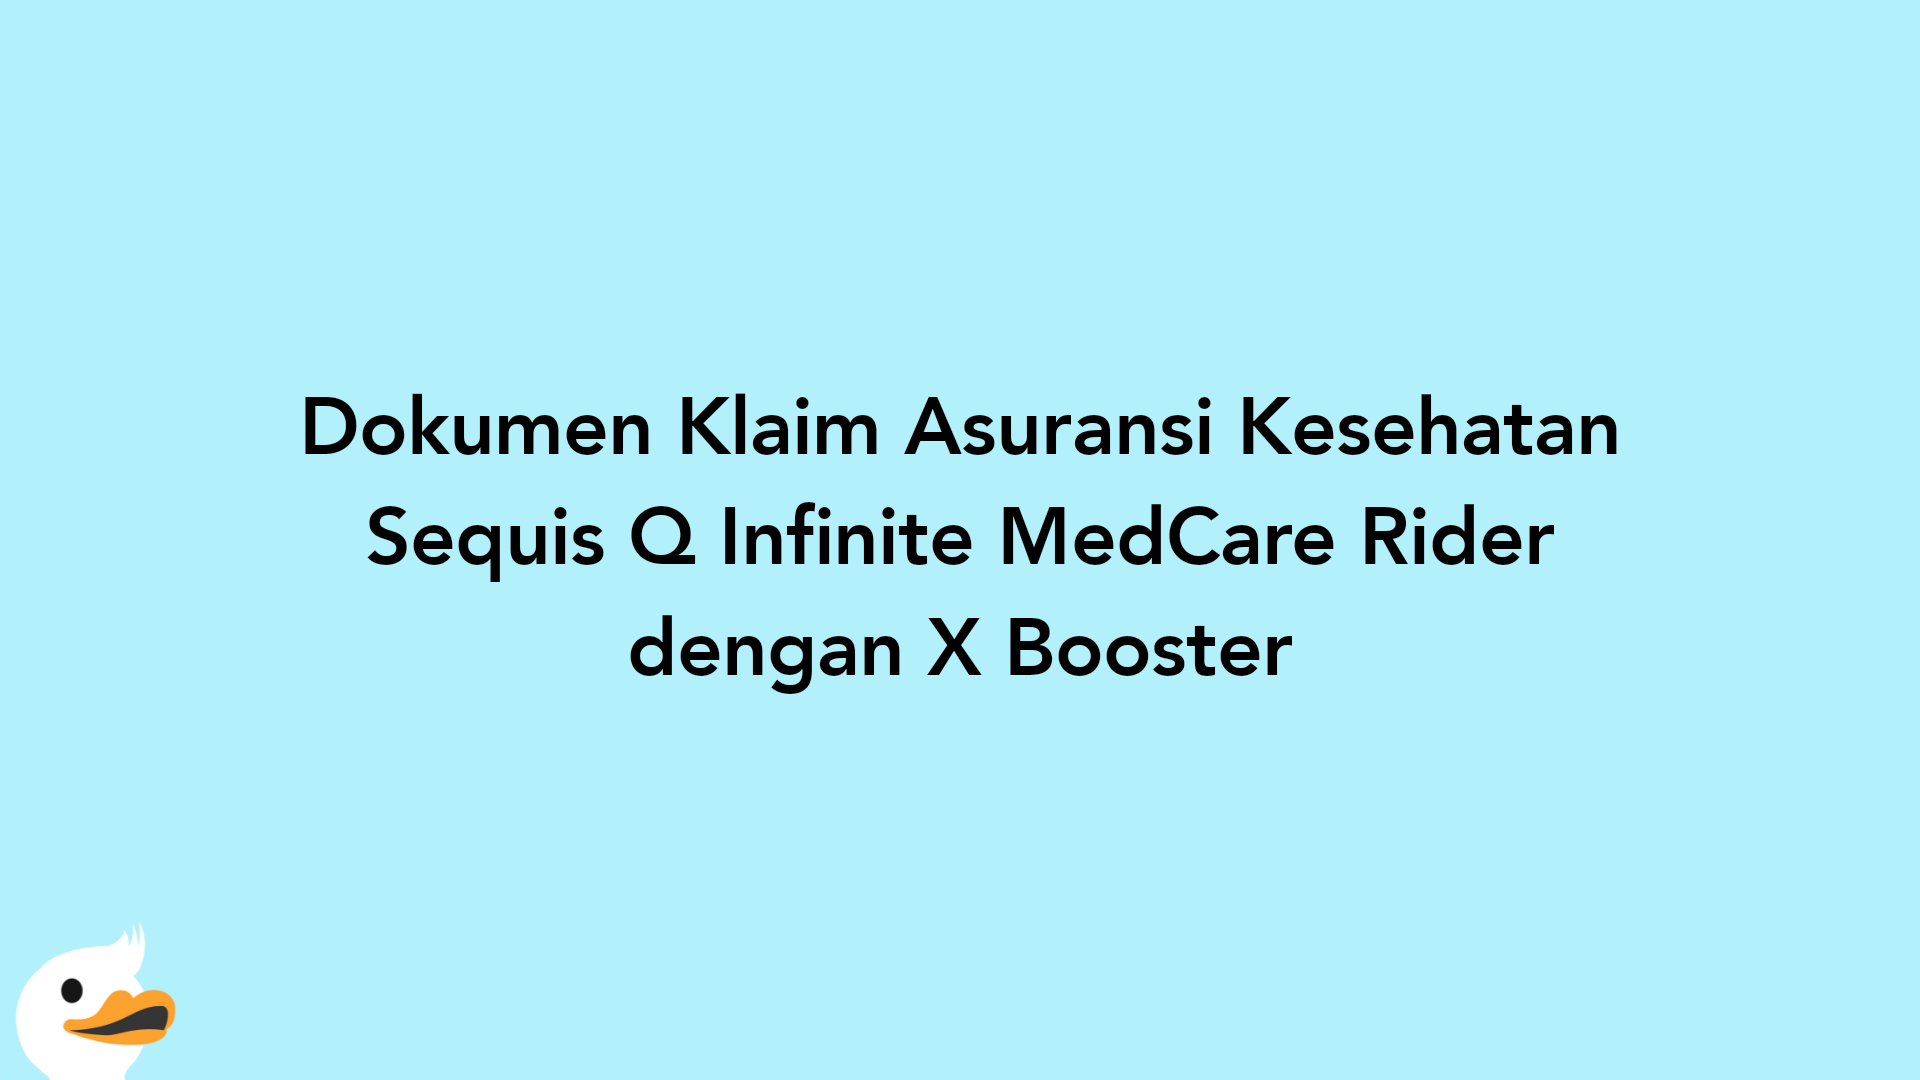 Dokumen Klaim Asuransi Kesehatan Sequis Q Infinite MedCare Rider dengan X Booster